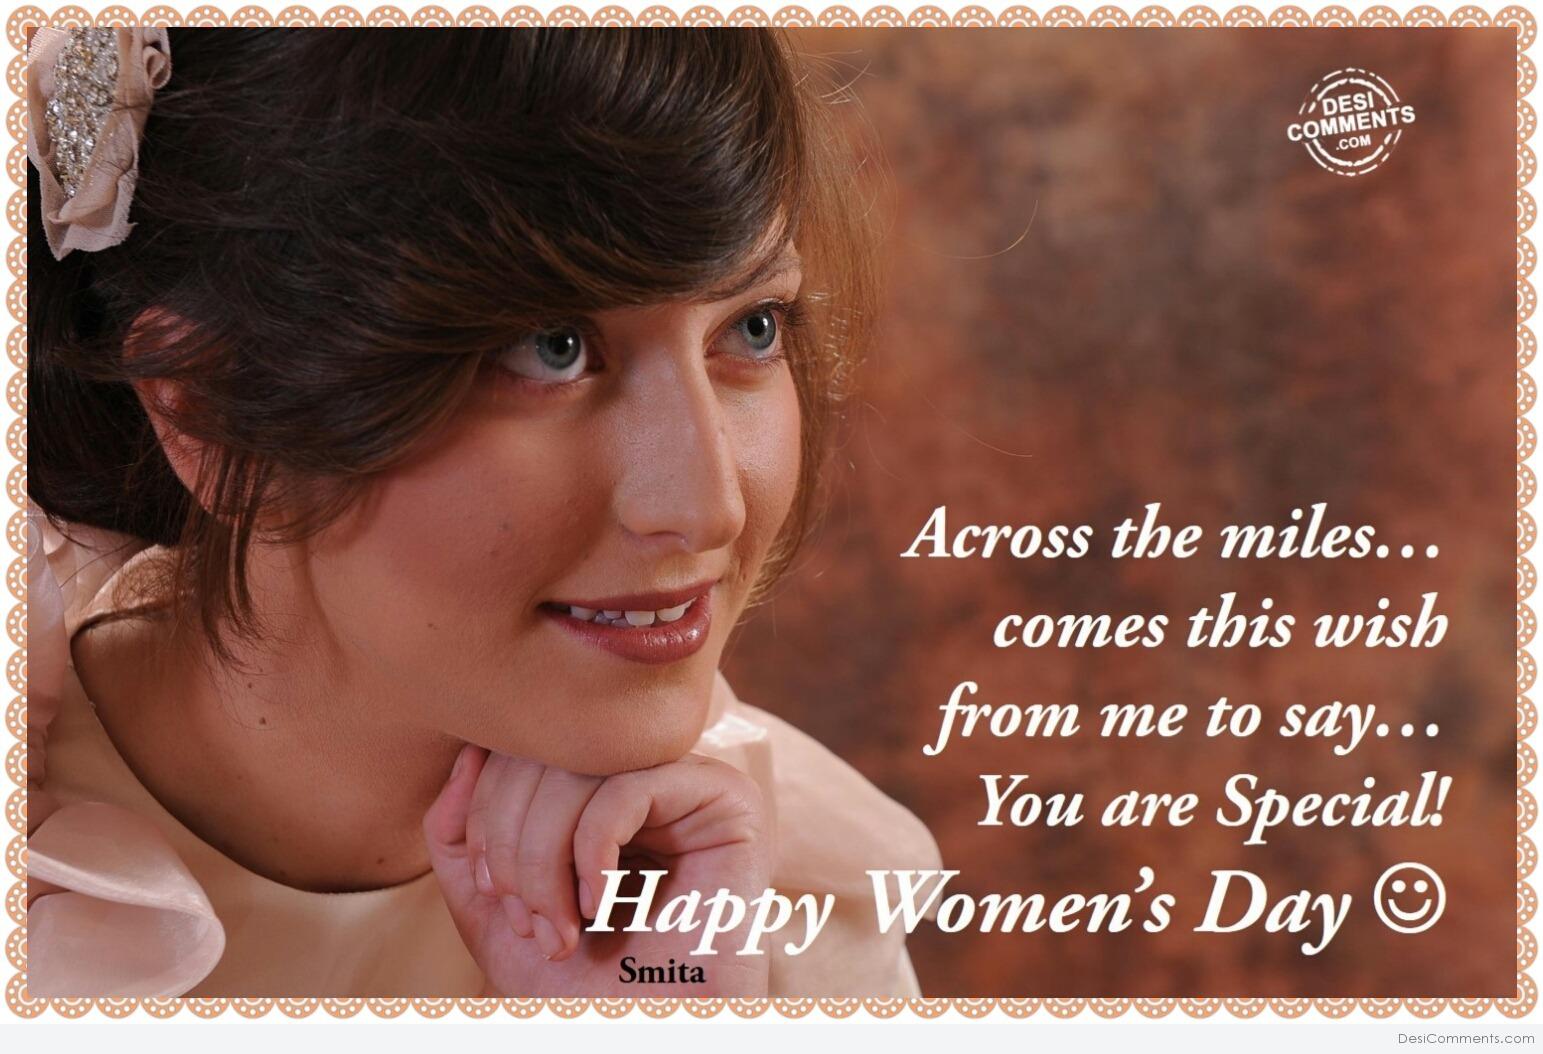 Happy Women's Day - DesiComments.com